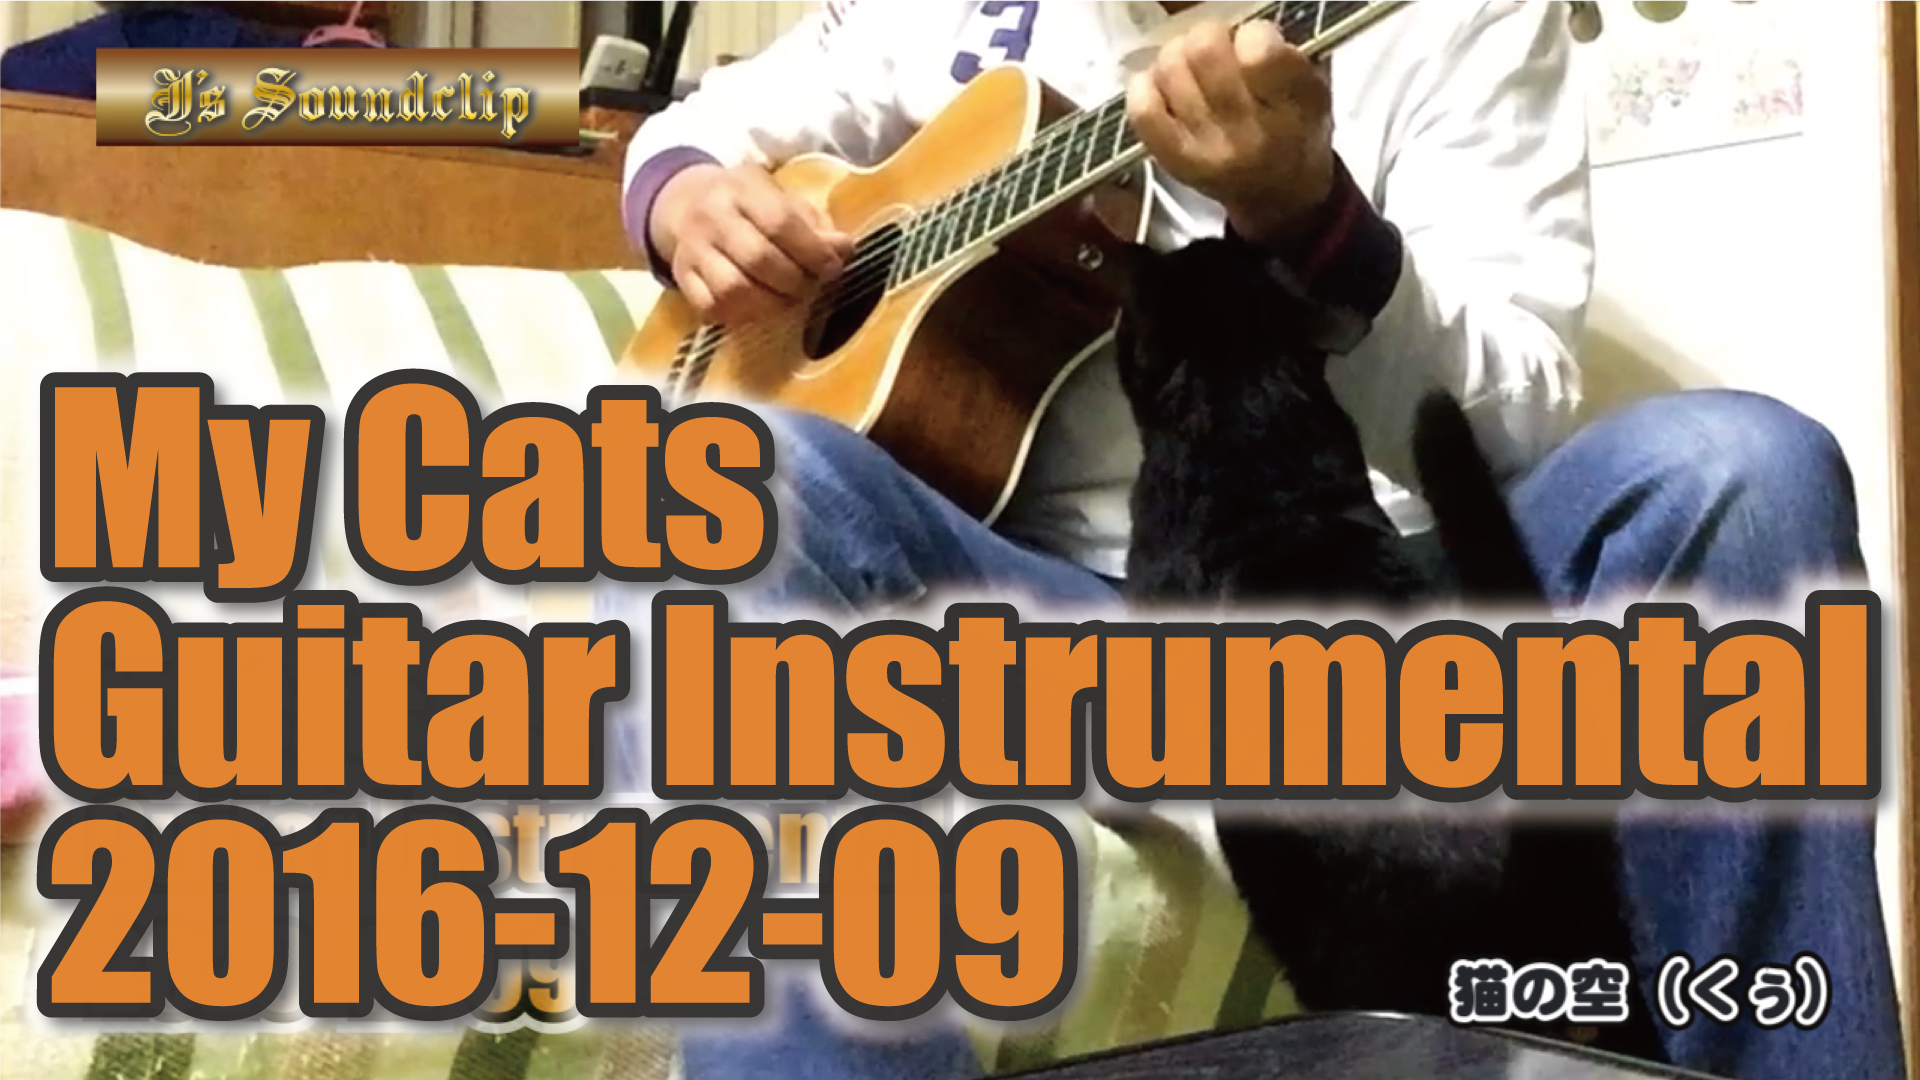 My cats 変わらないでいて〜　Guitar instrumental with my cat “空”chan